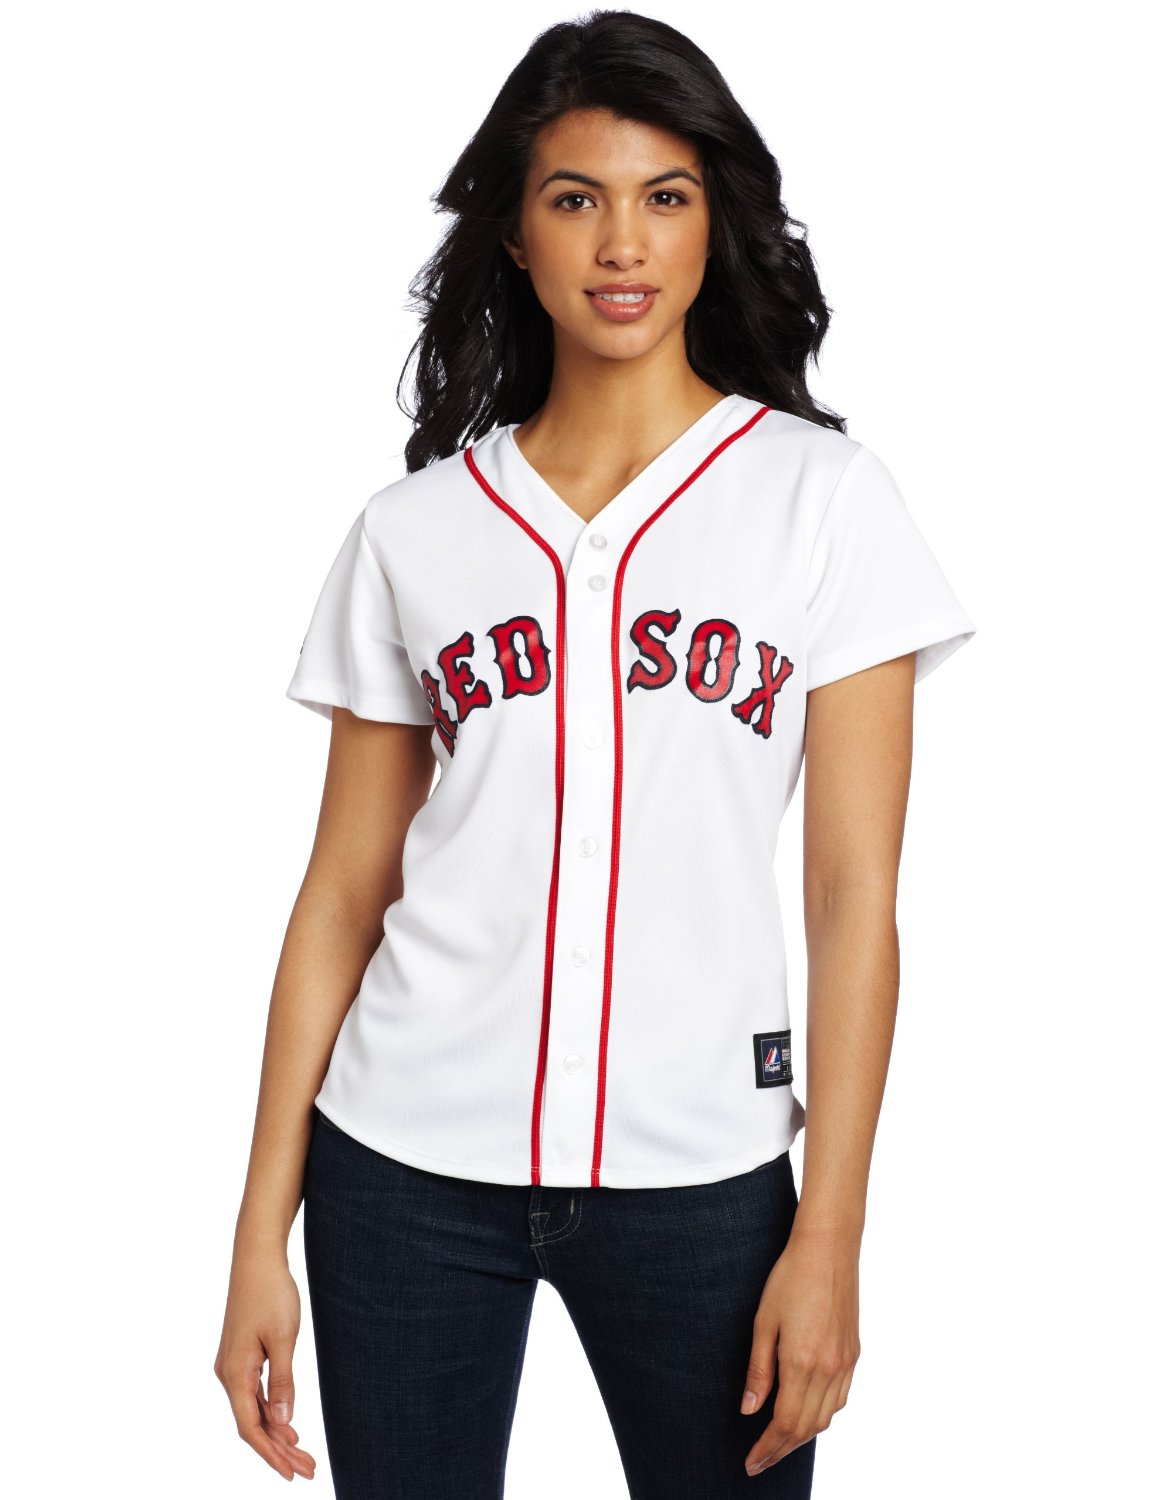 girl wearing baseball jersey